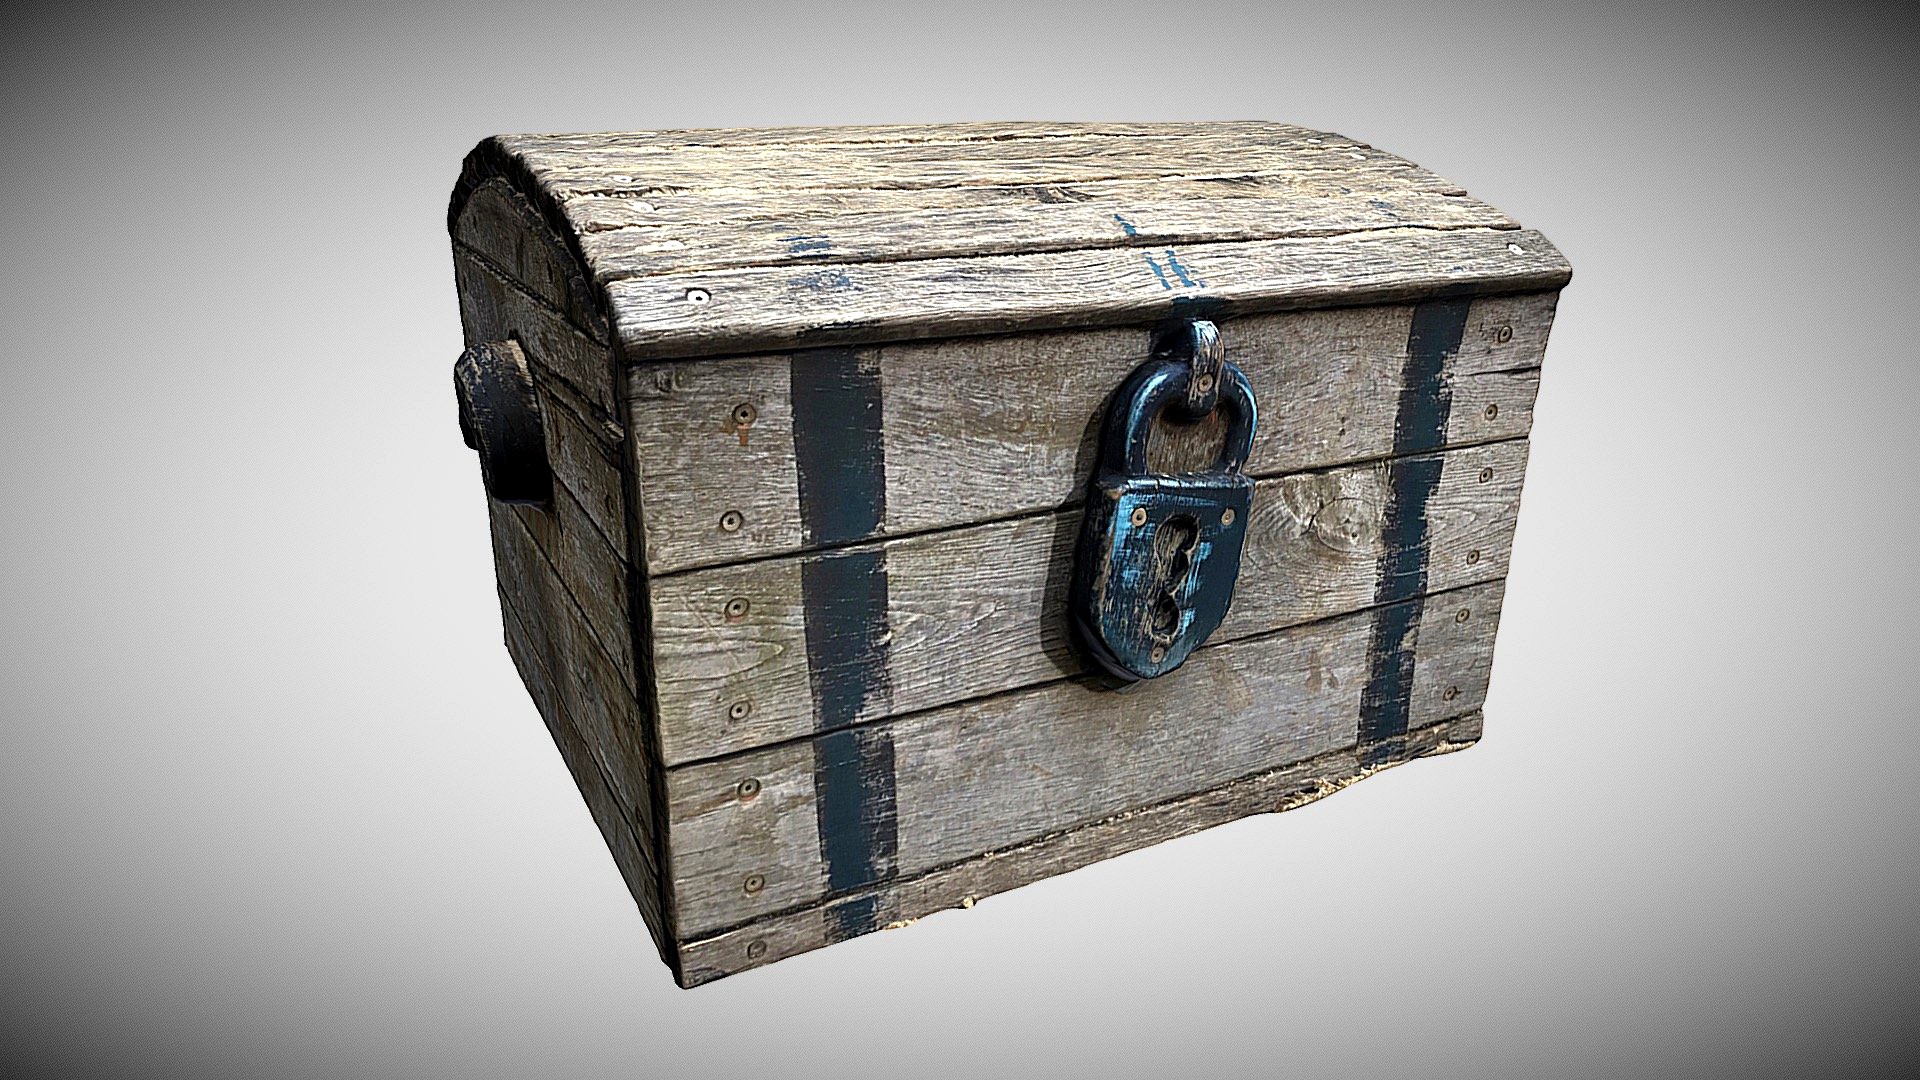 Pirates treasure chest